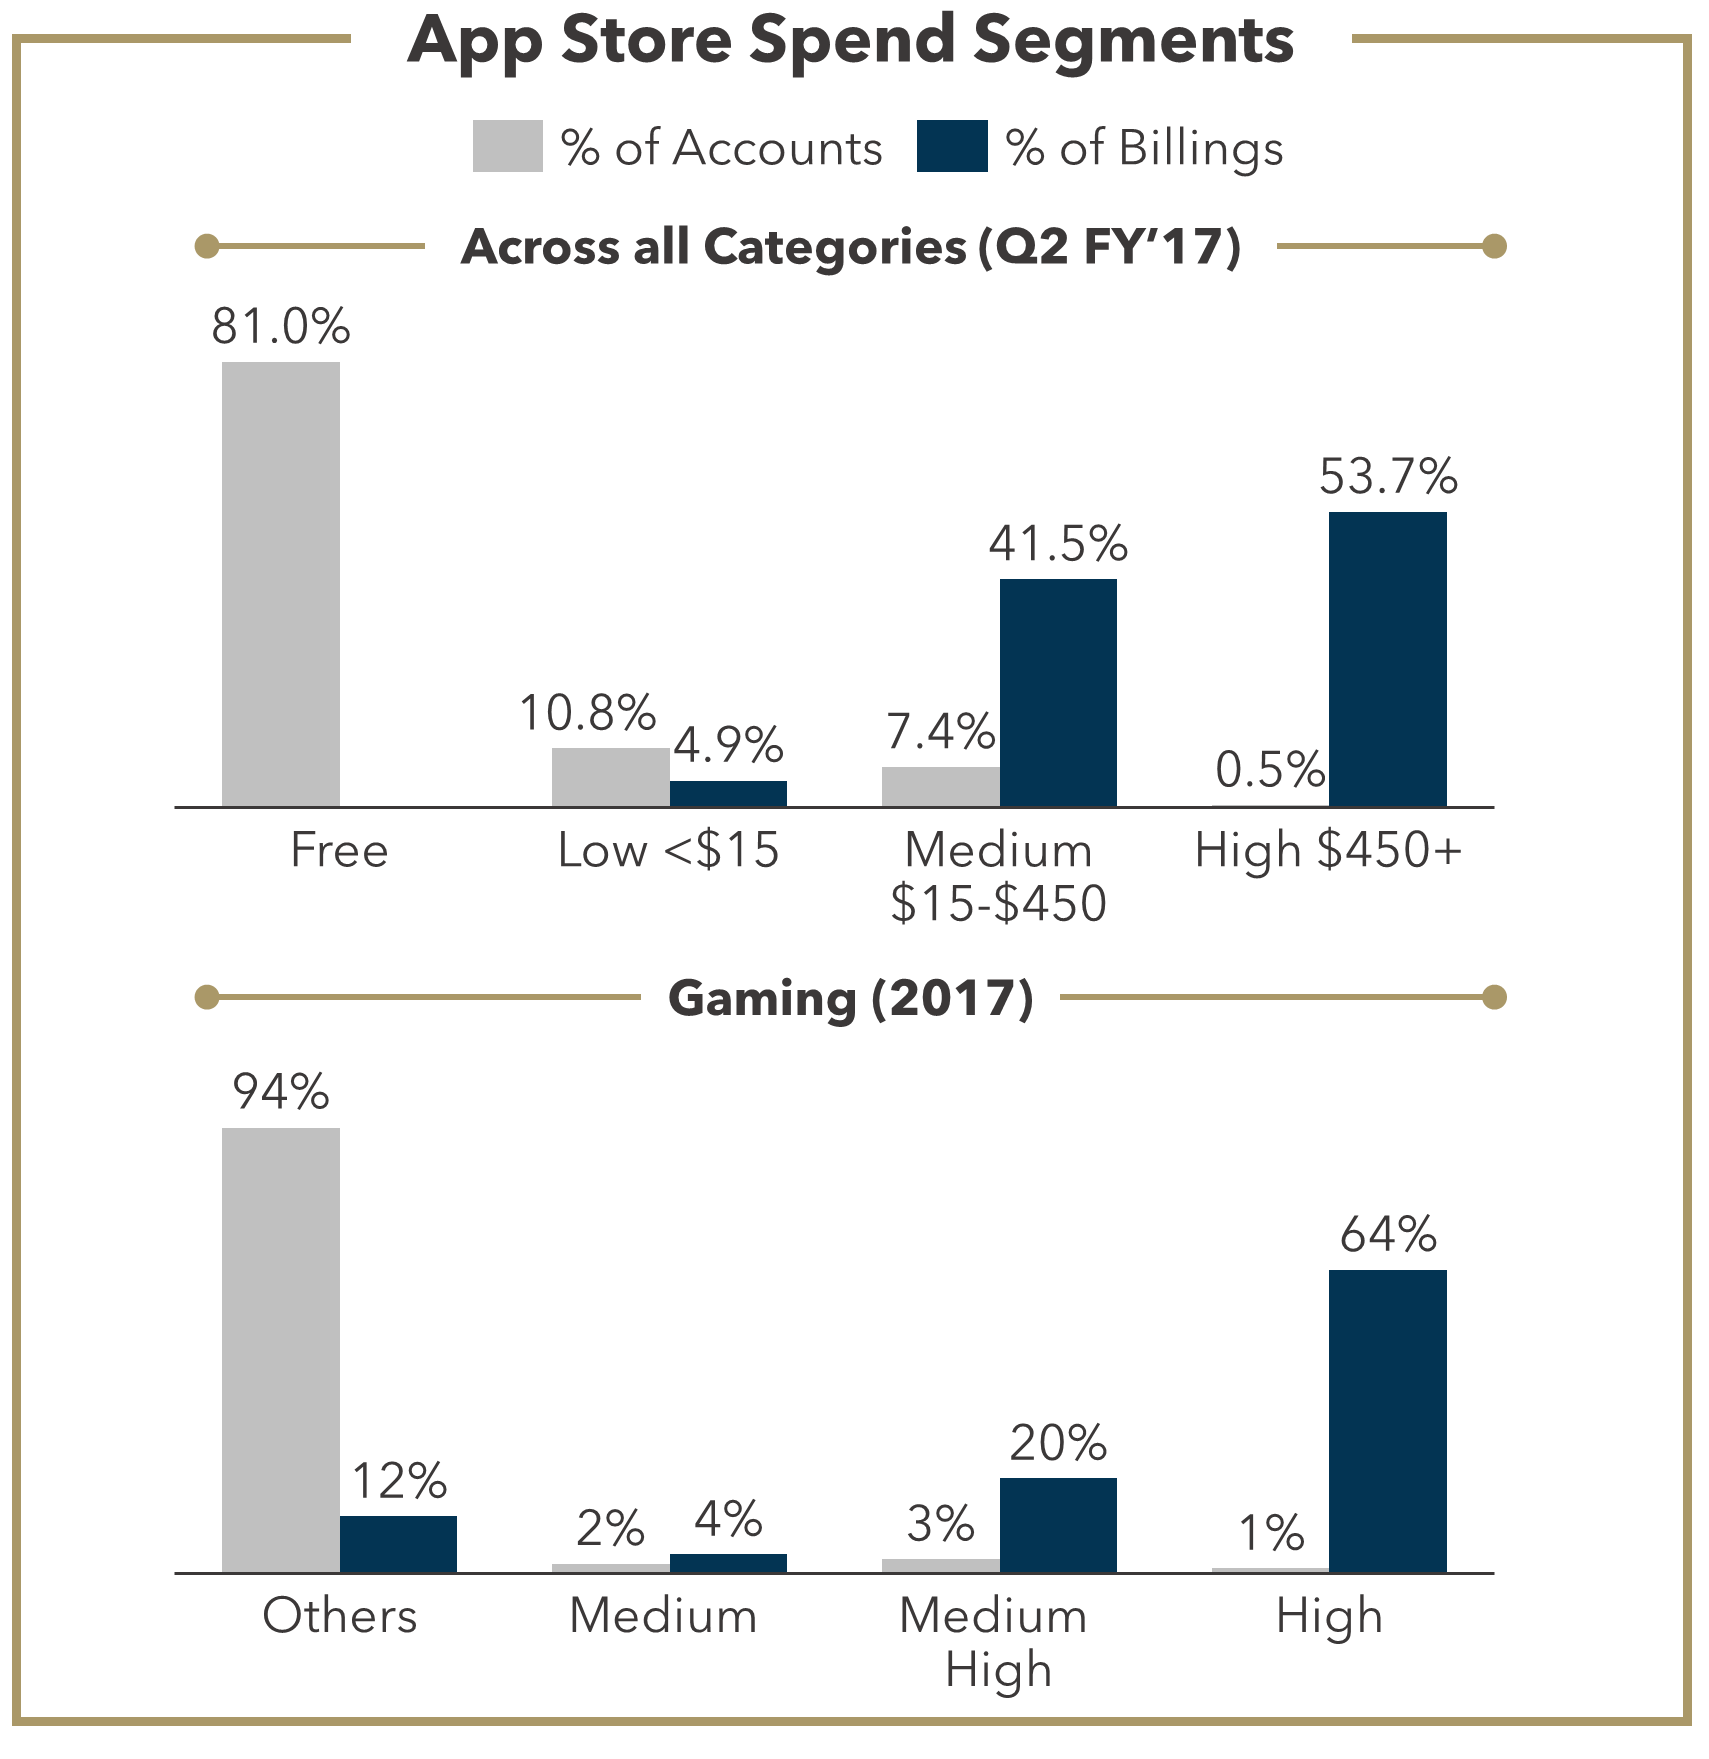 FIGURE 9: App Store Spend Segments 